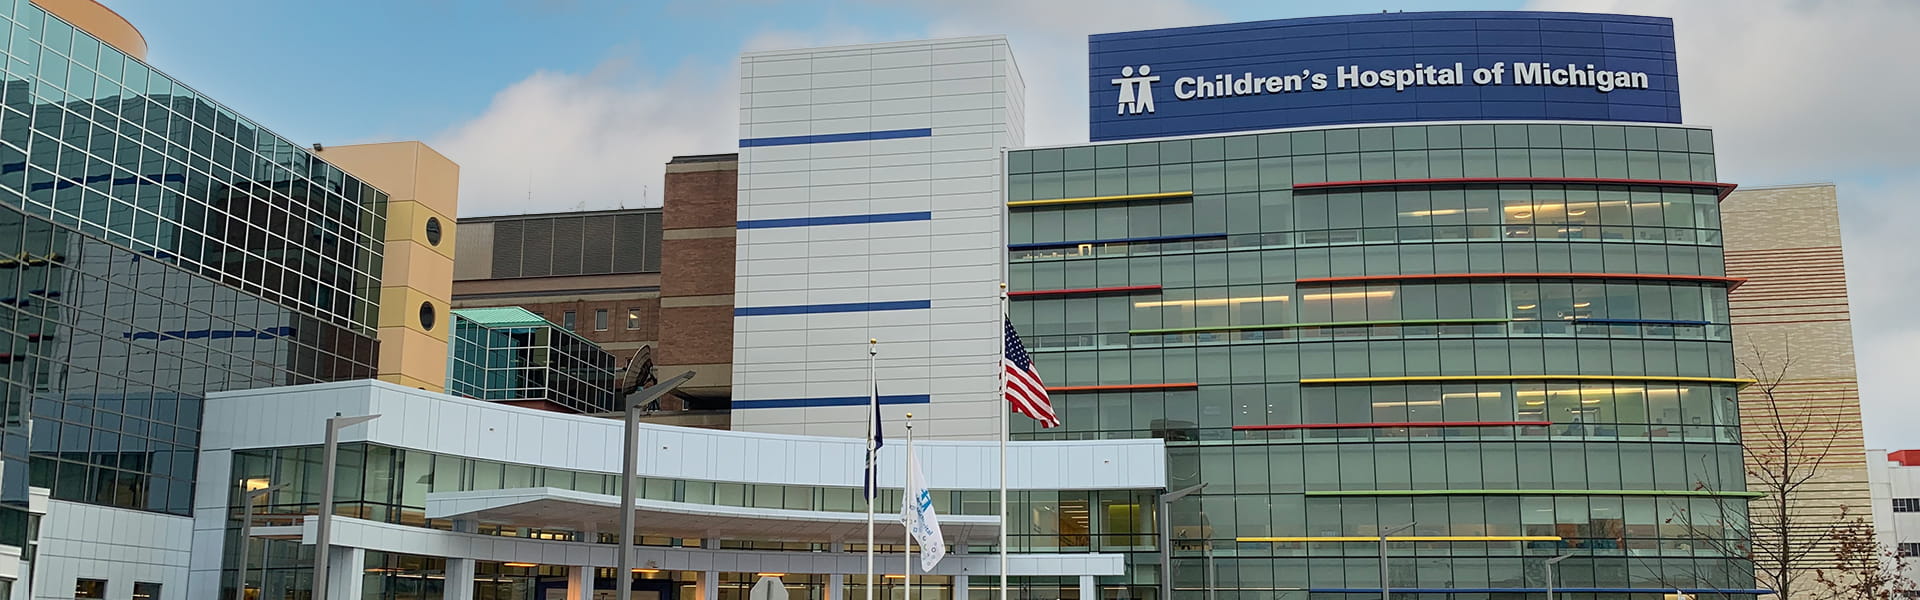 DMC Children's Hospital of Michigan exterior.